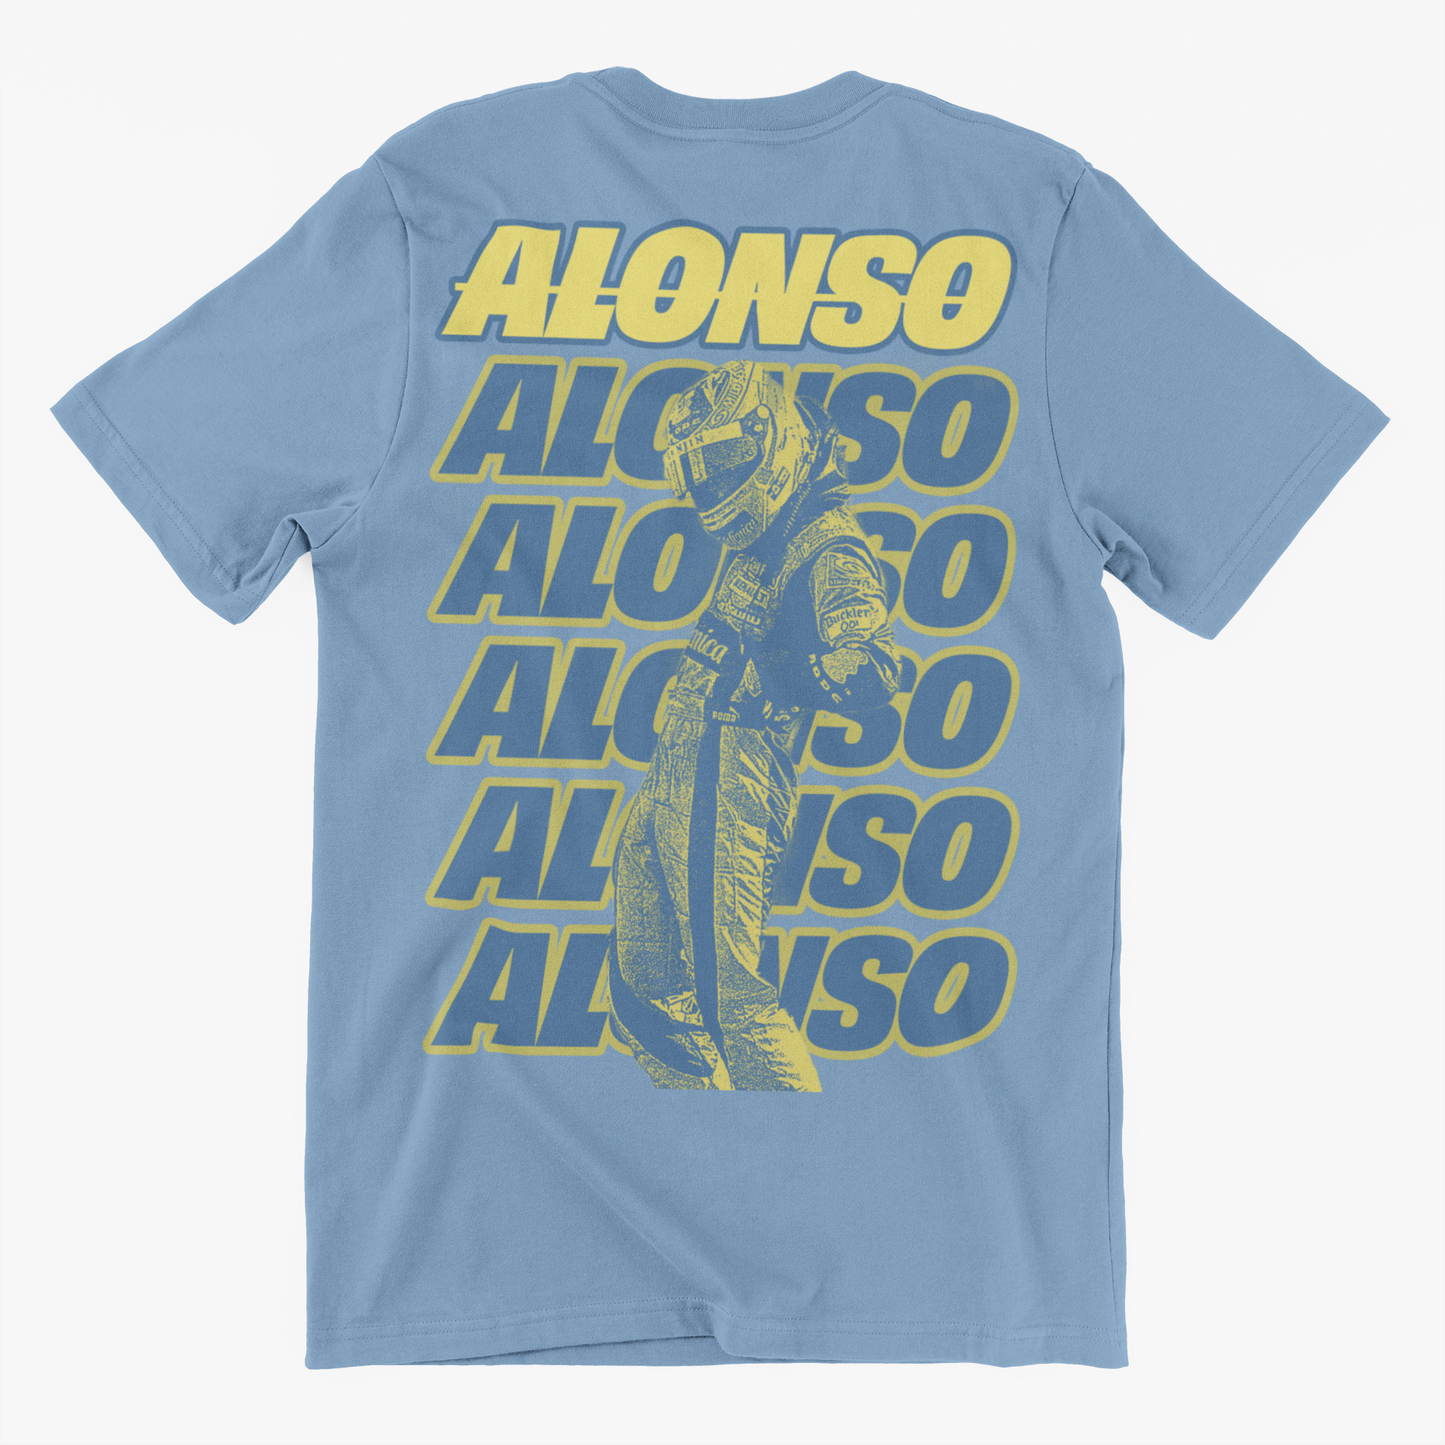 Fernando Alonso T-shirt